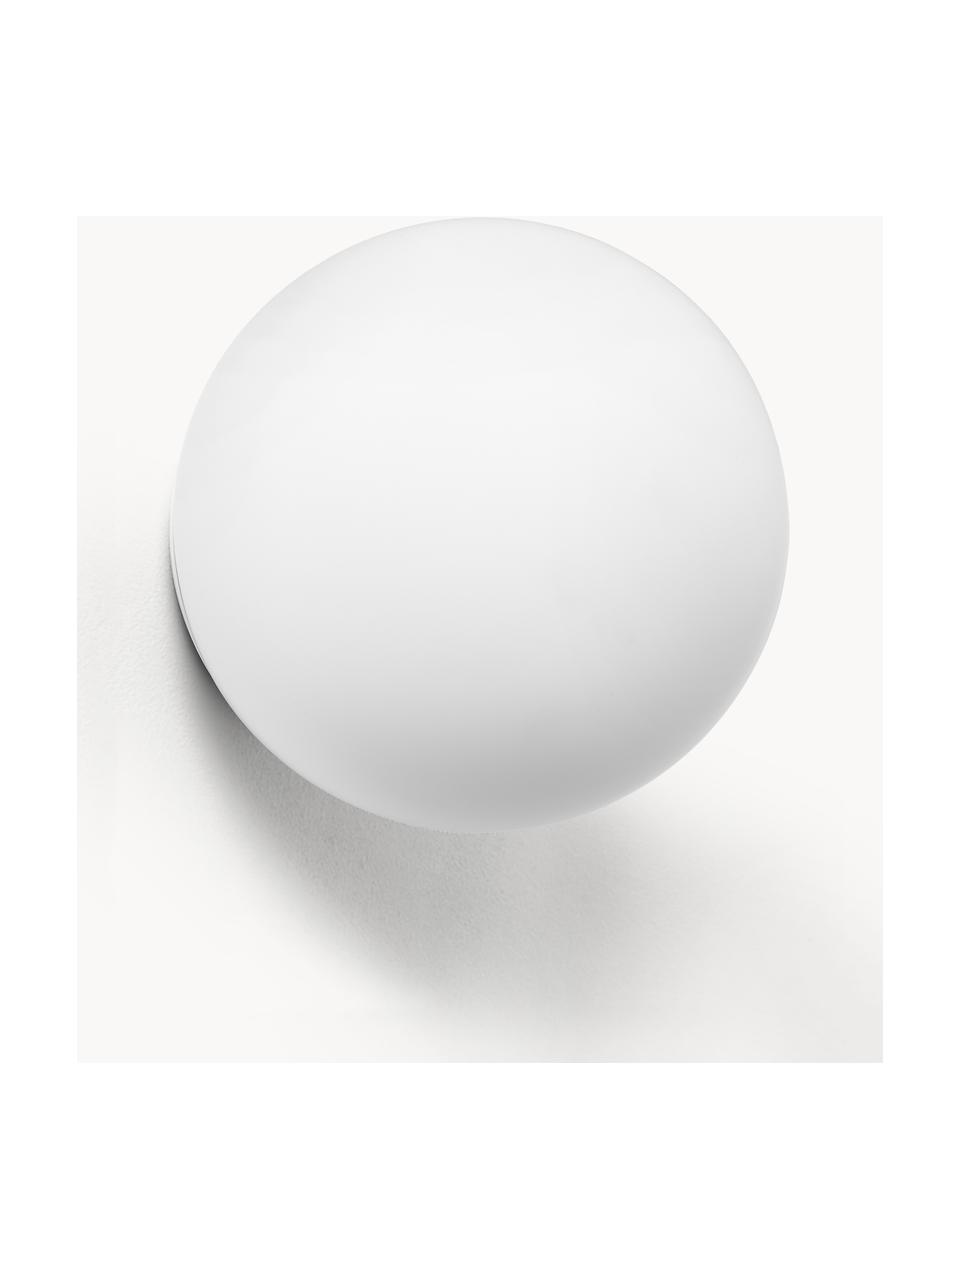 Wandleuchte Dioscuri, verschiedene Größen, Lampenschirm: Opalglas, Weiß, Ø 25 x H 23 cm